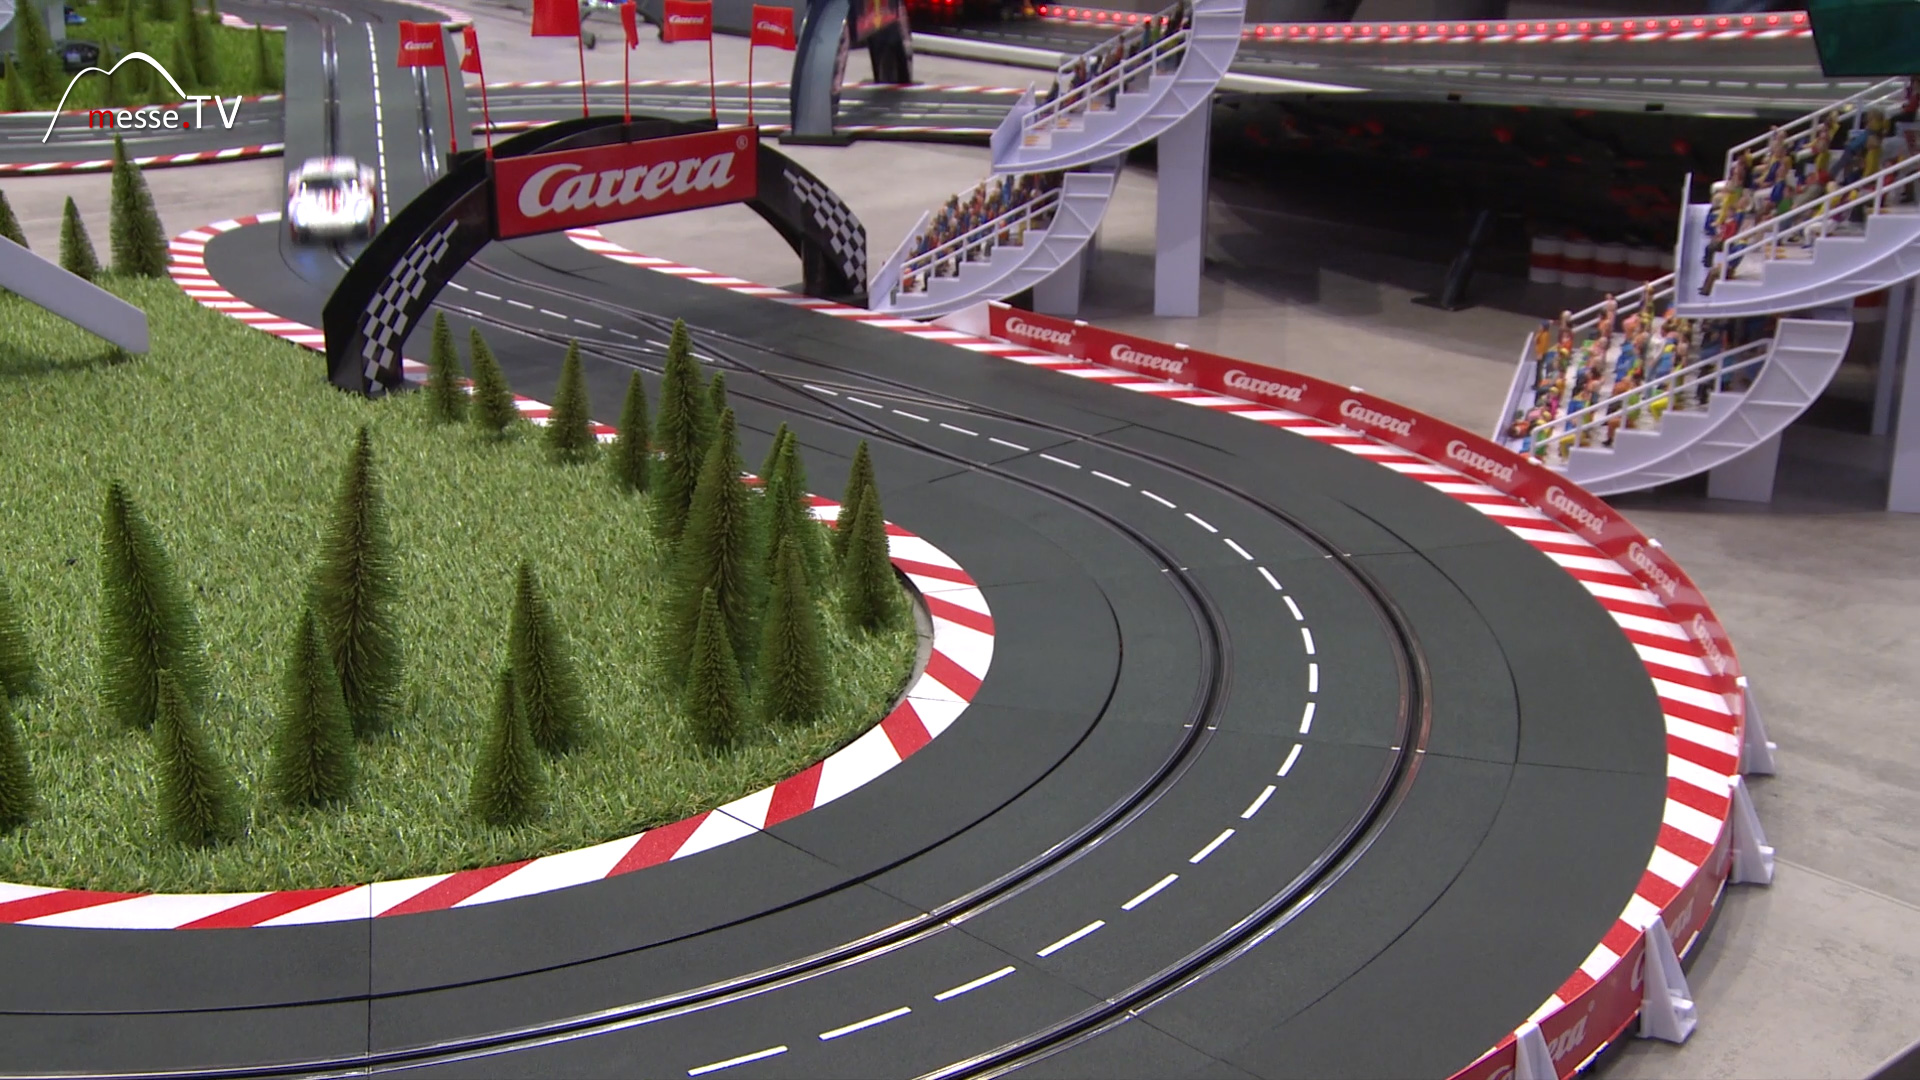 Carrera car racing track course